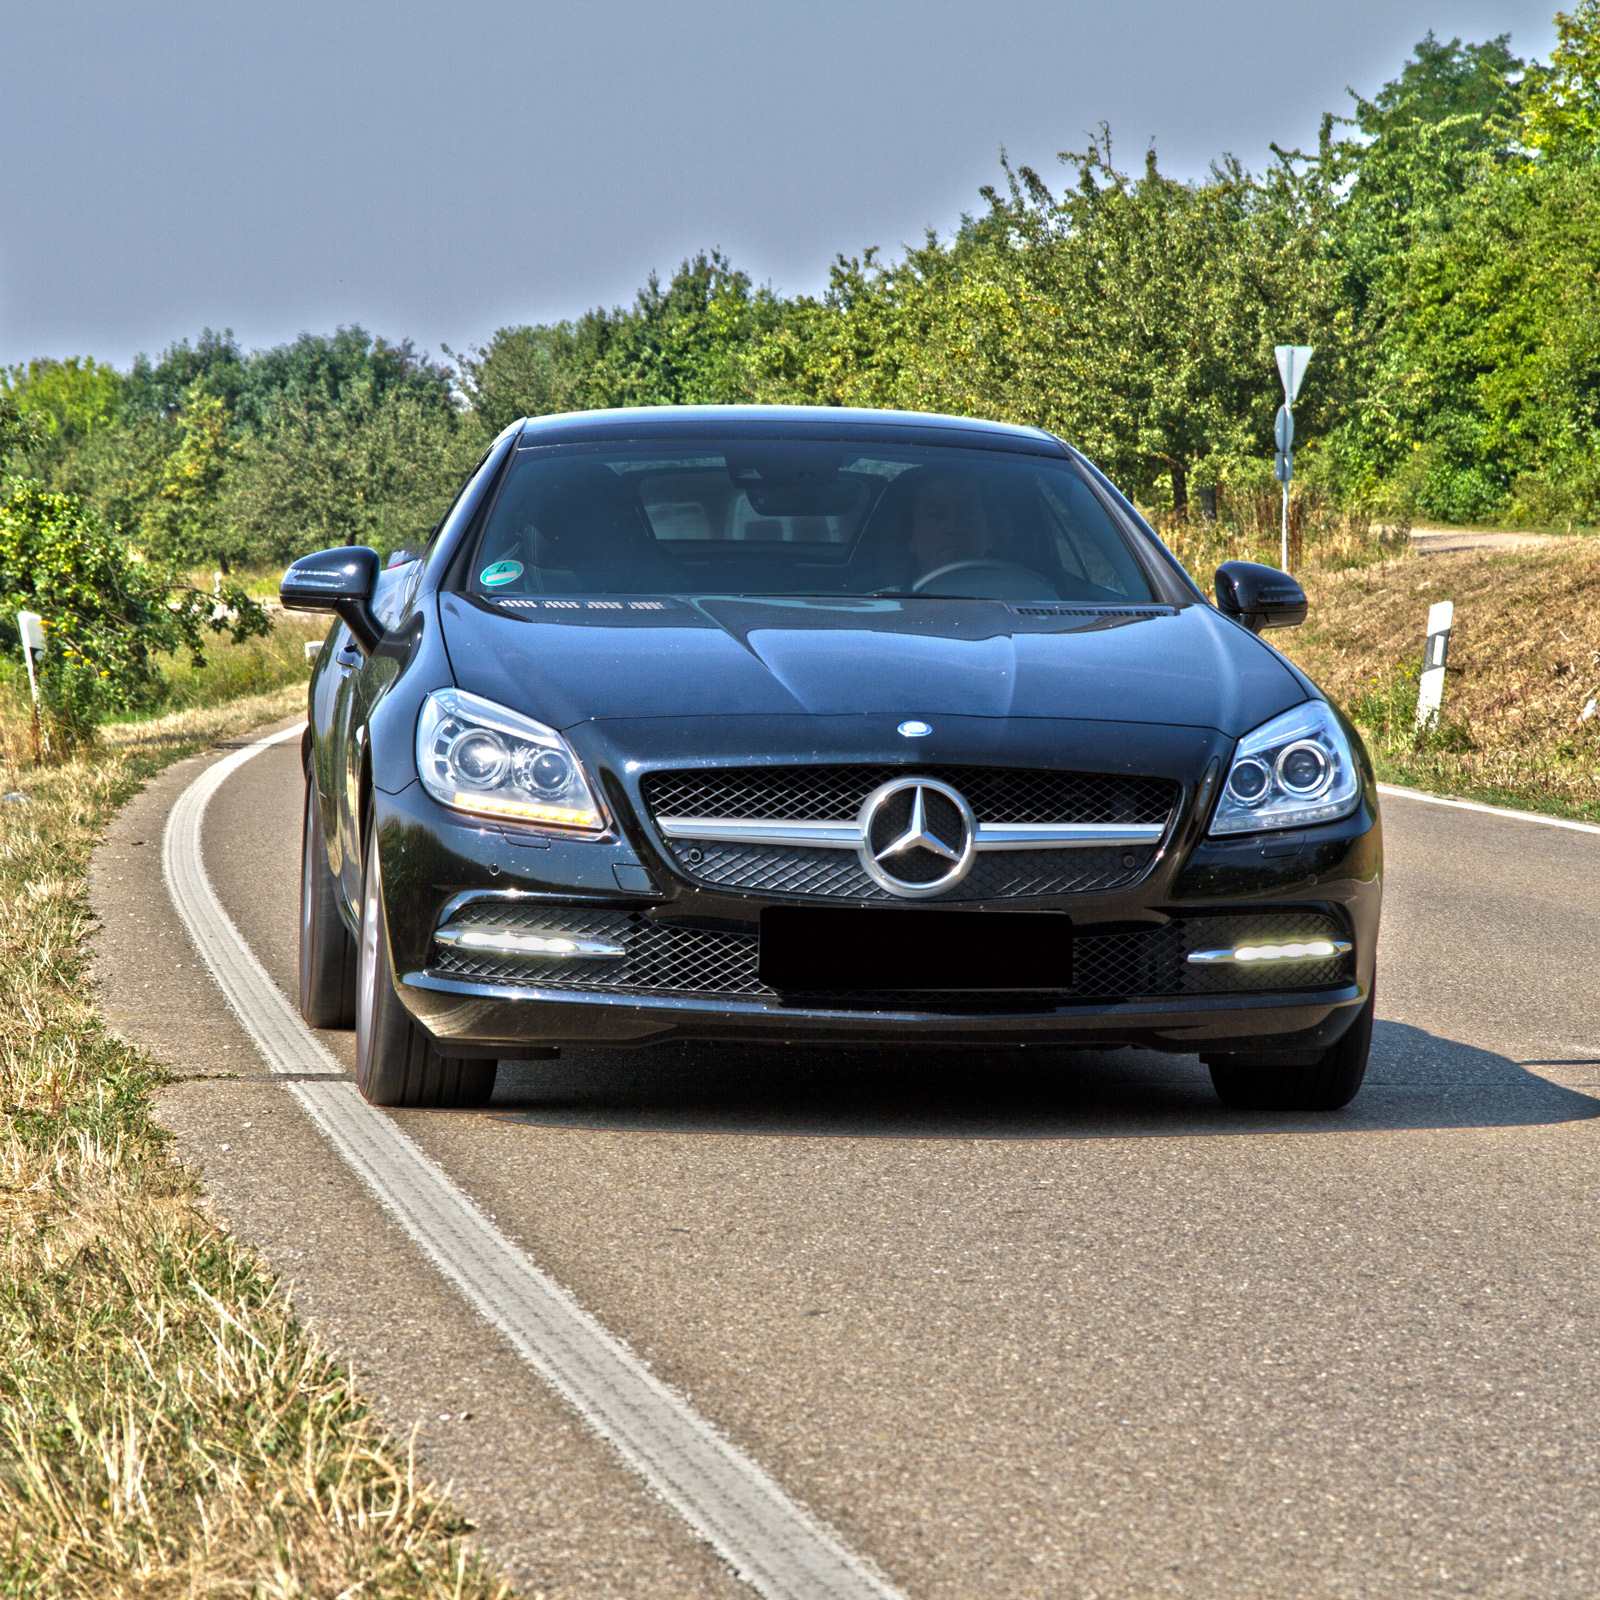 W teście: Mercedes SLK 250 CDI